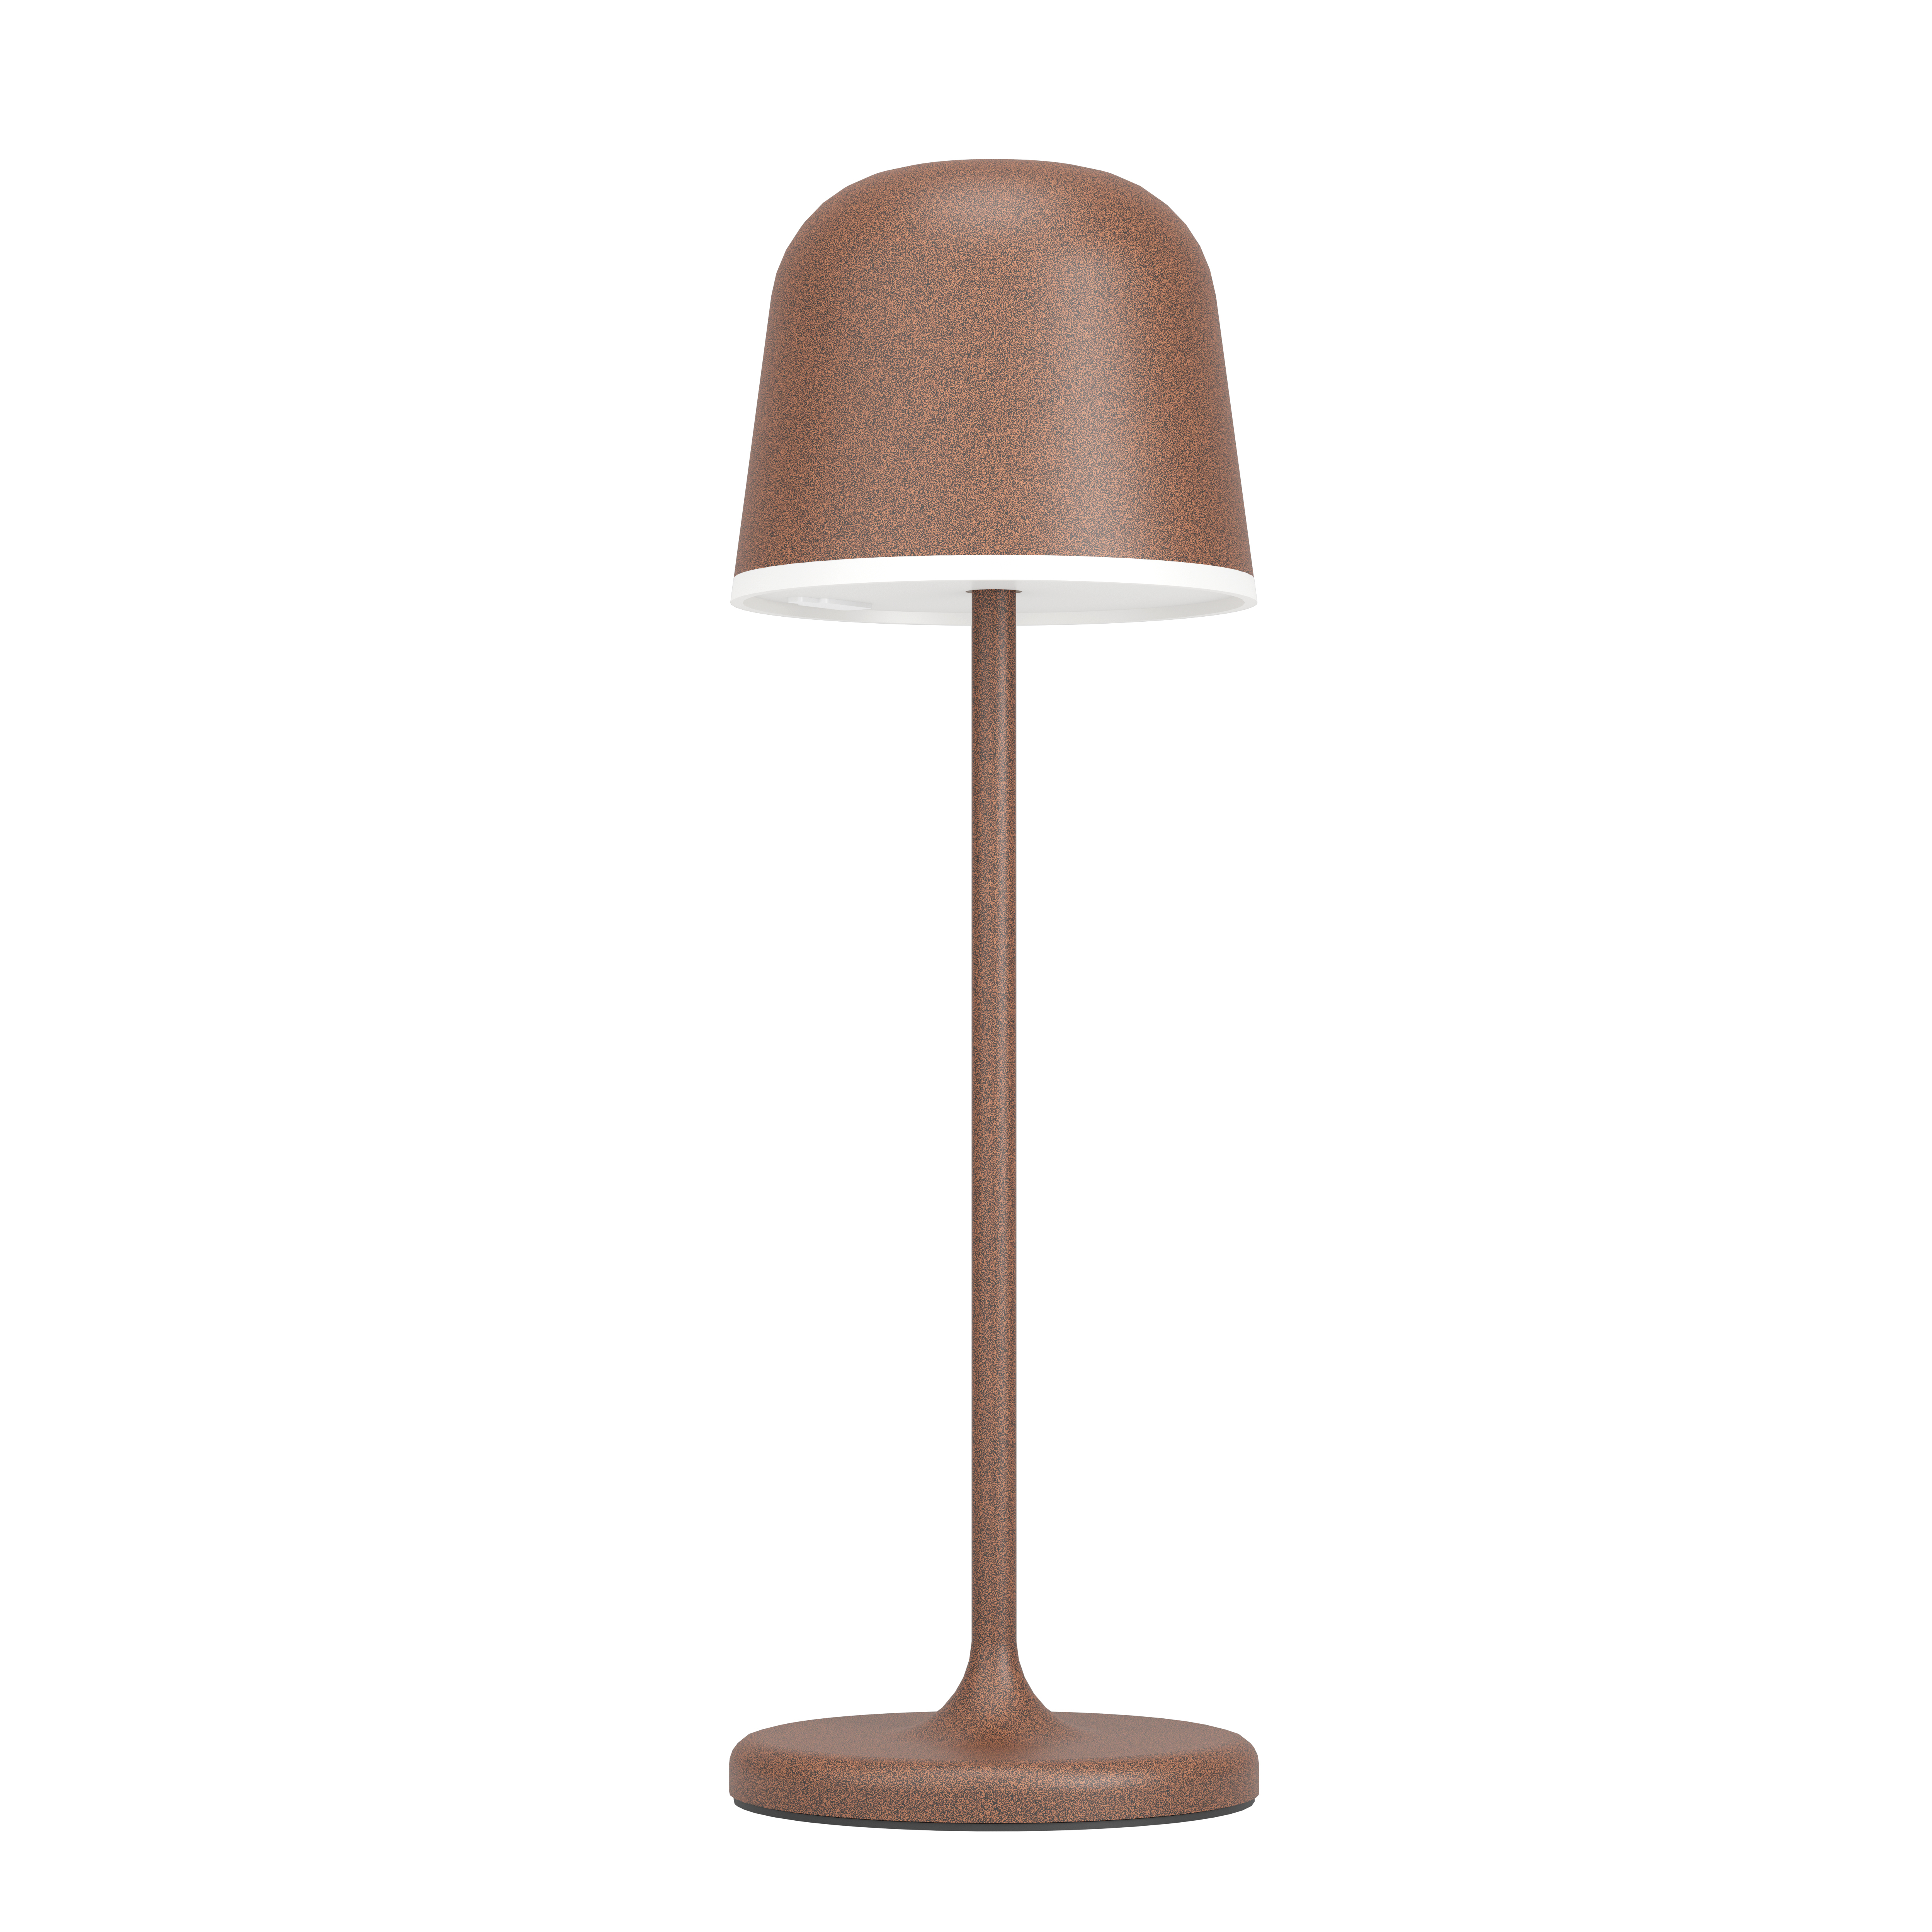 EGLO Lampe de table Mannera 900459 marron, batterie marron, batterie